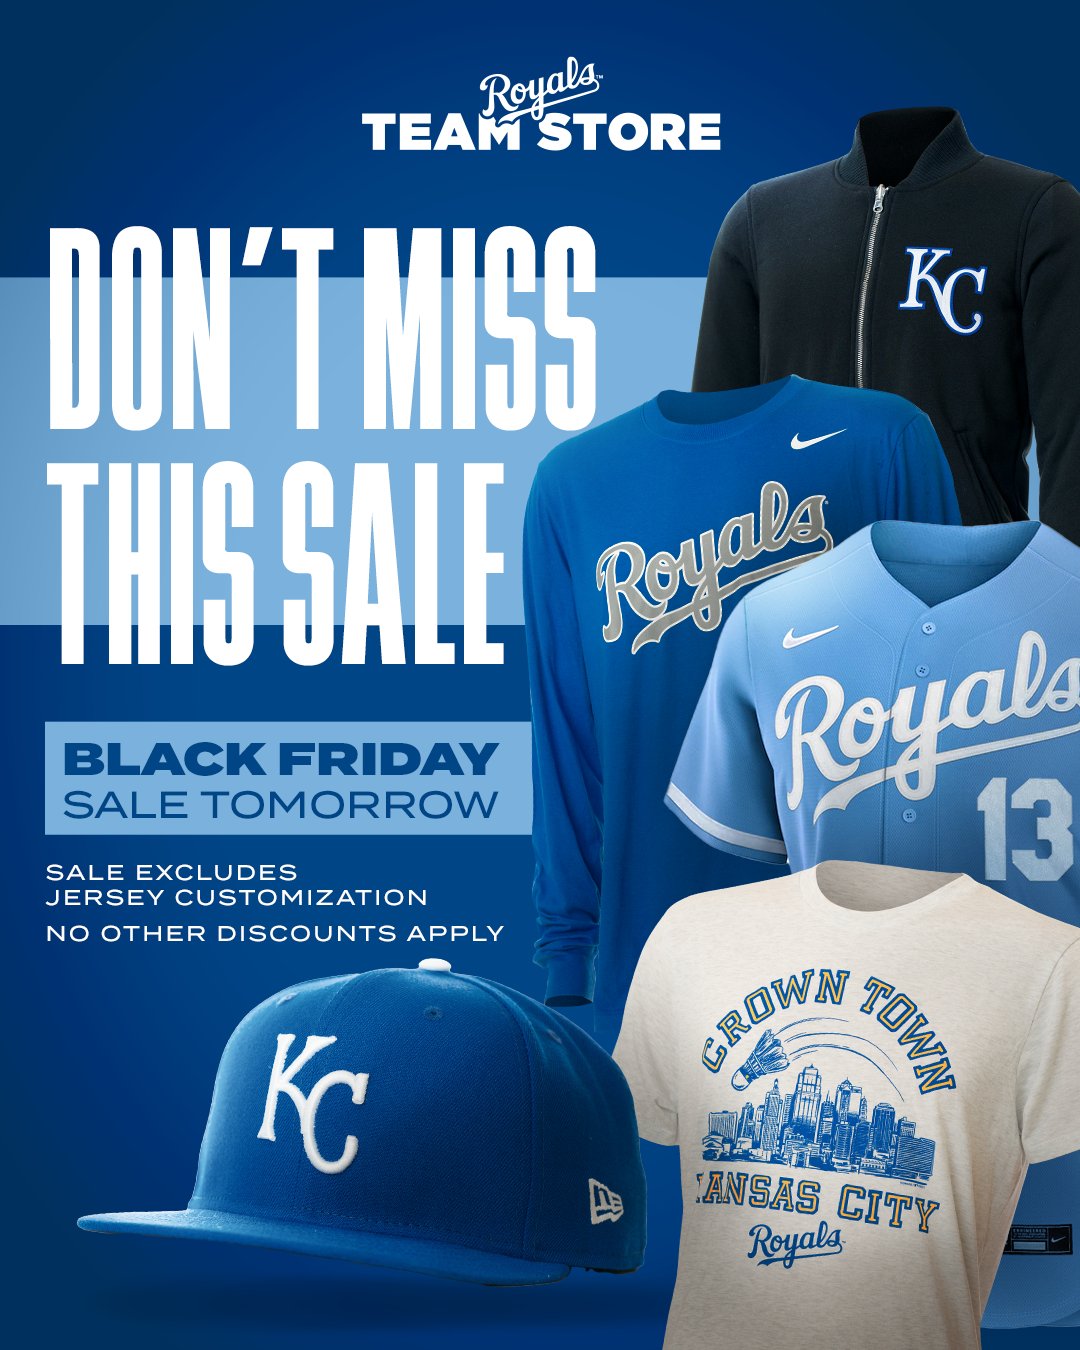 Kansas City Royals on X: Get 40% off at the @royalsteamstore